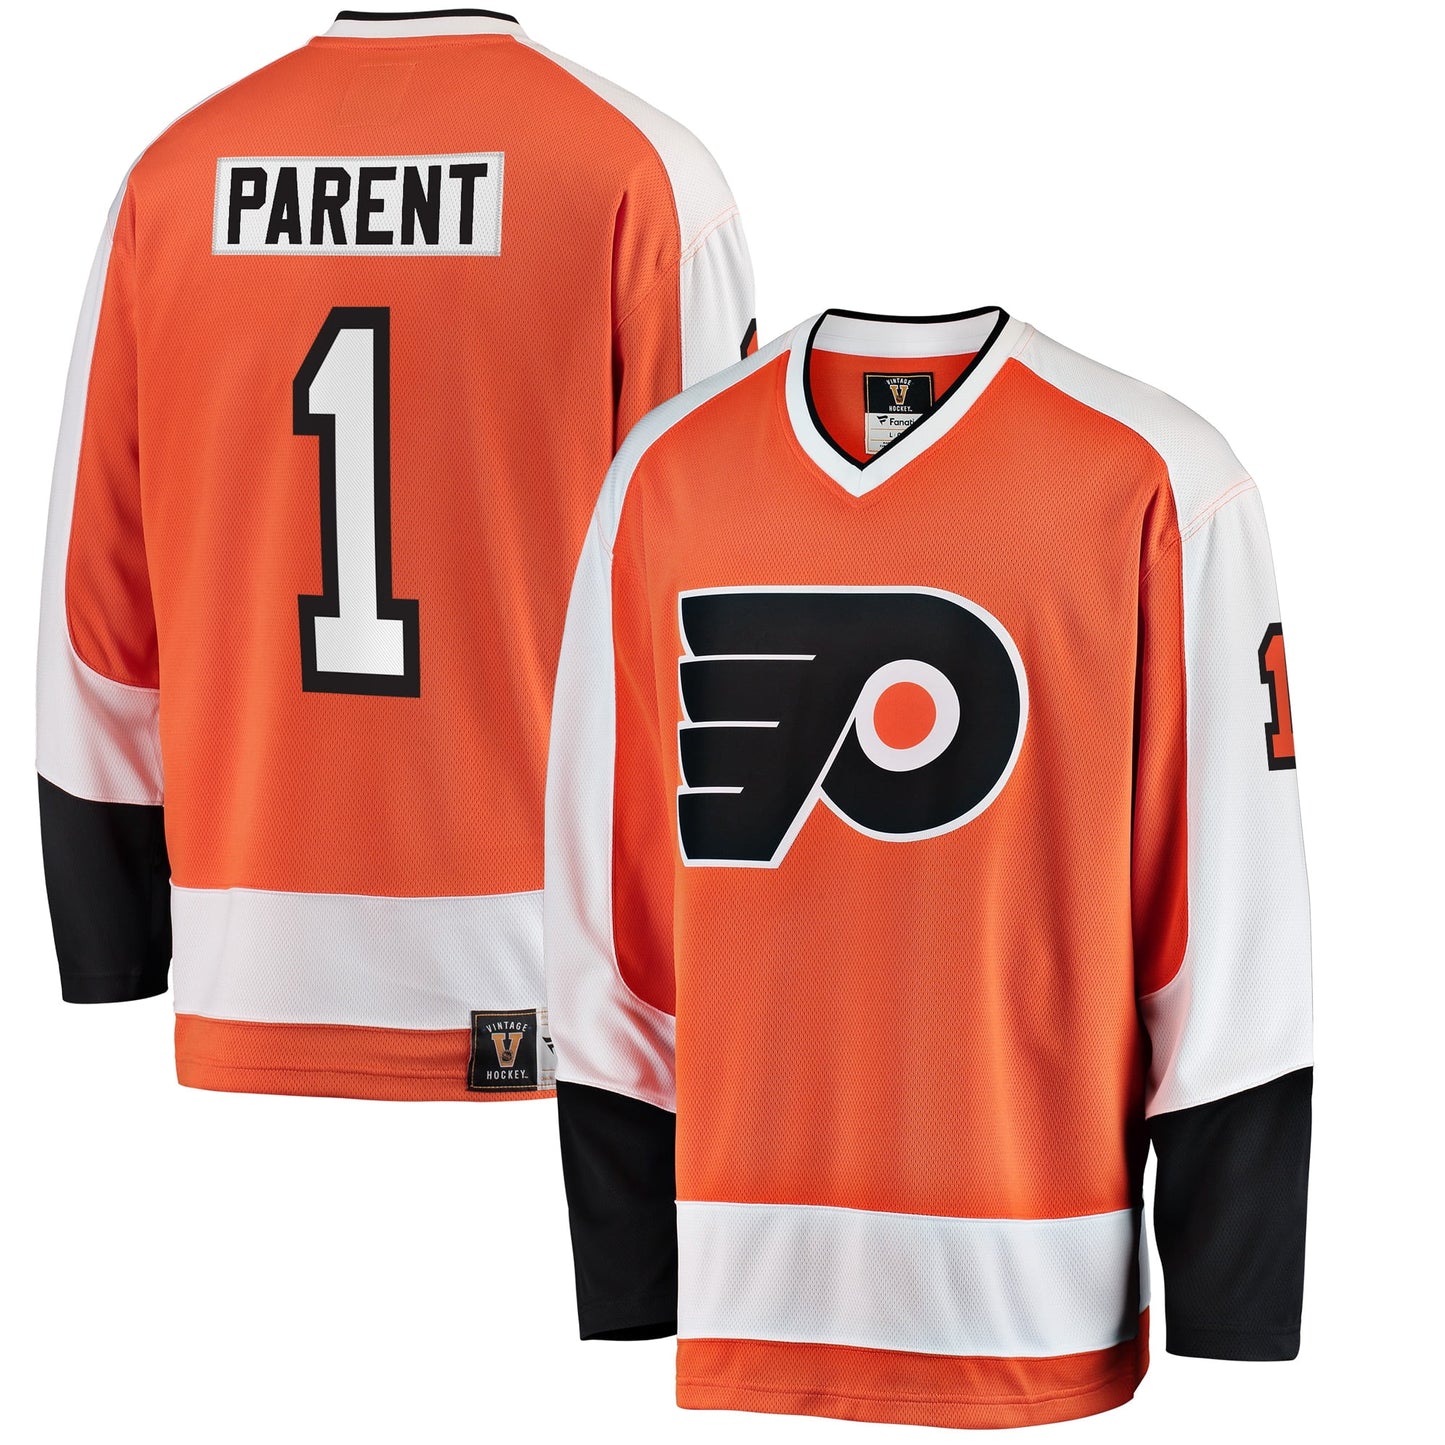 Men's Fanatics Branded Bernie Parent Orange Philadelphia Flyers Premier Breakaway Retired Player Jersey